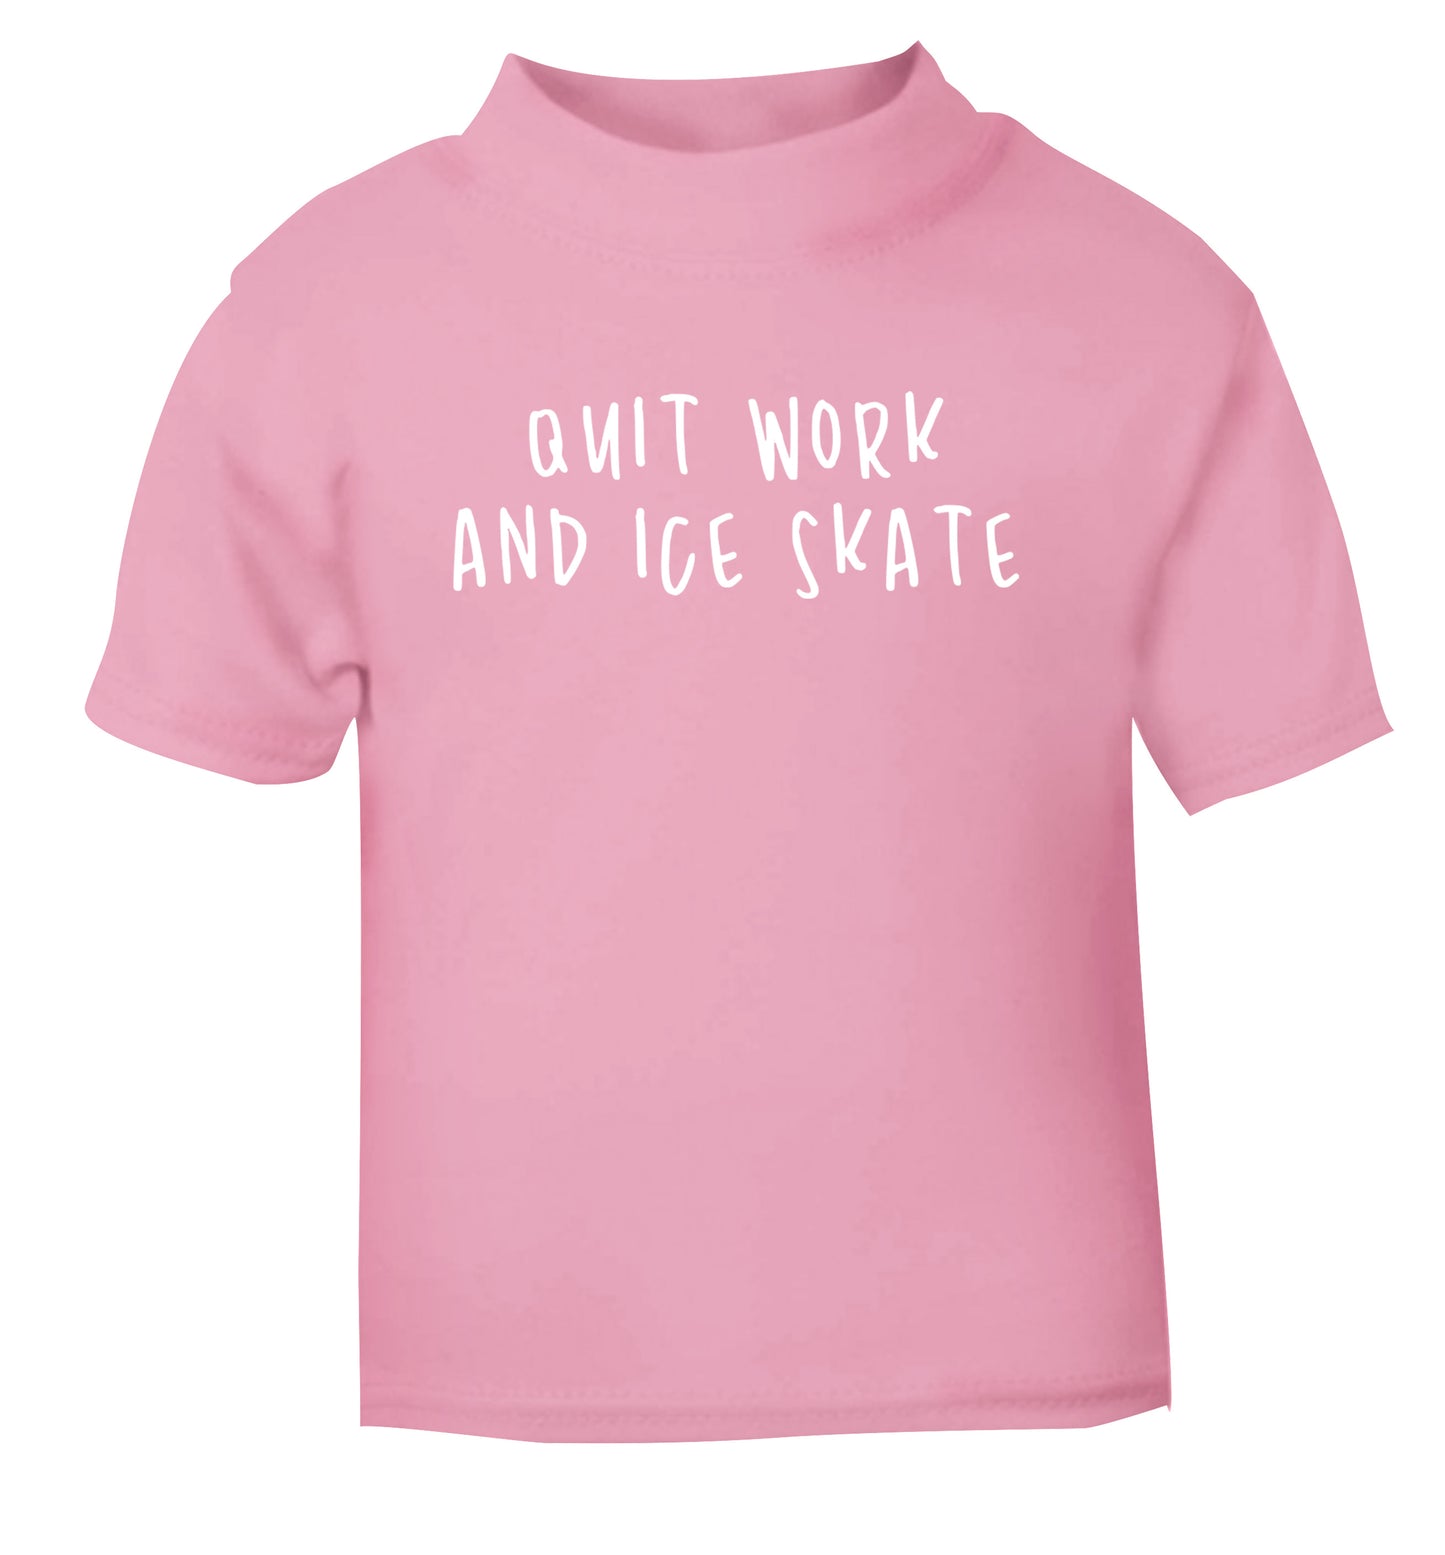 Quit work ice skate light pink Baby Toddler Tshirt 2 Years